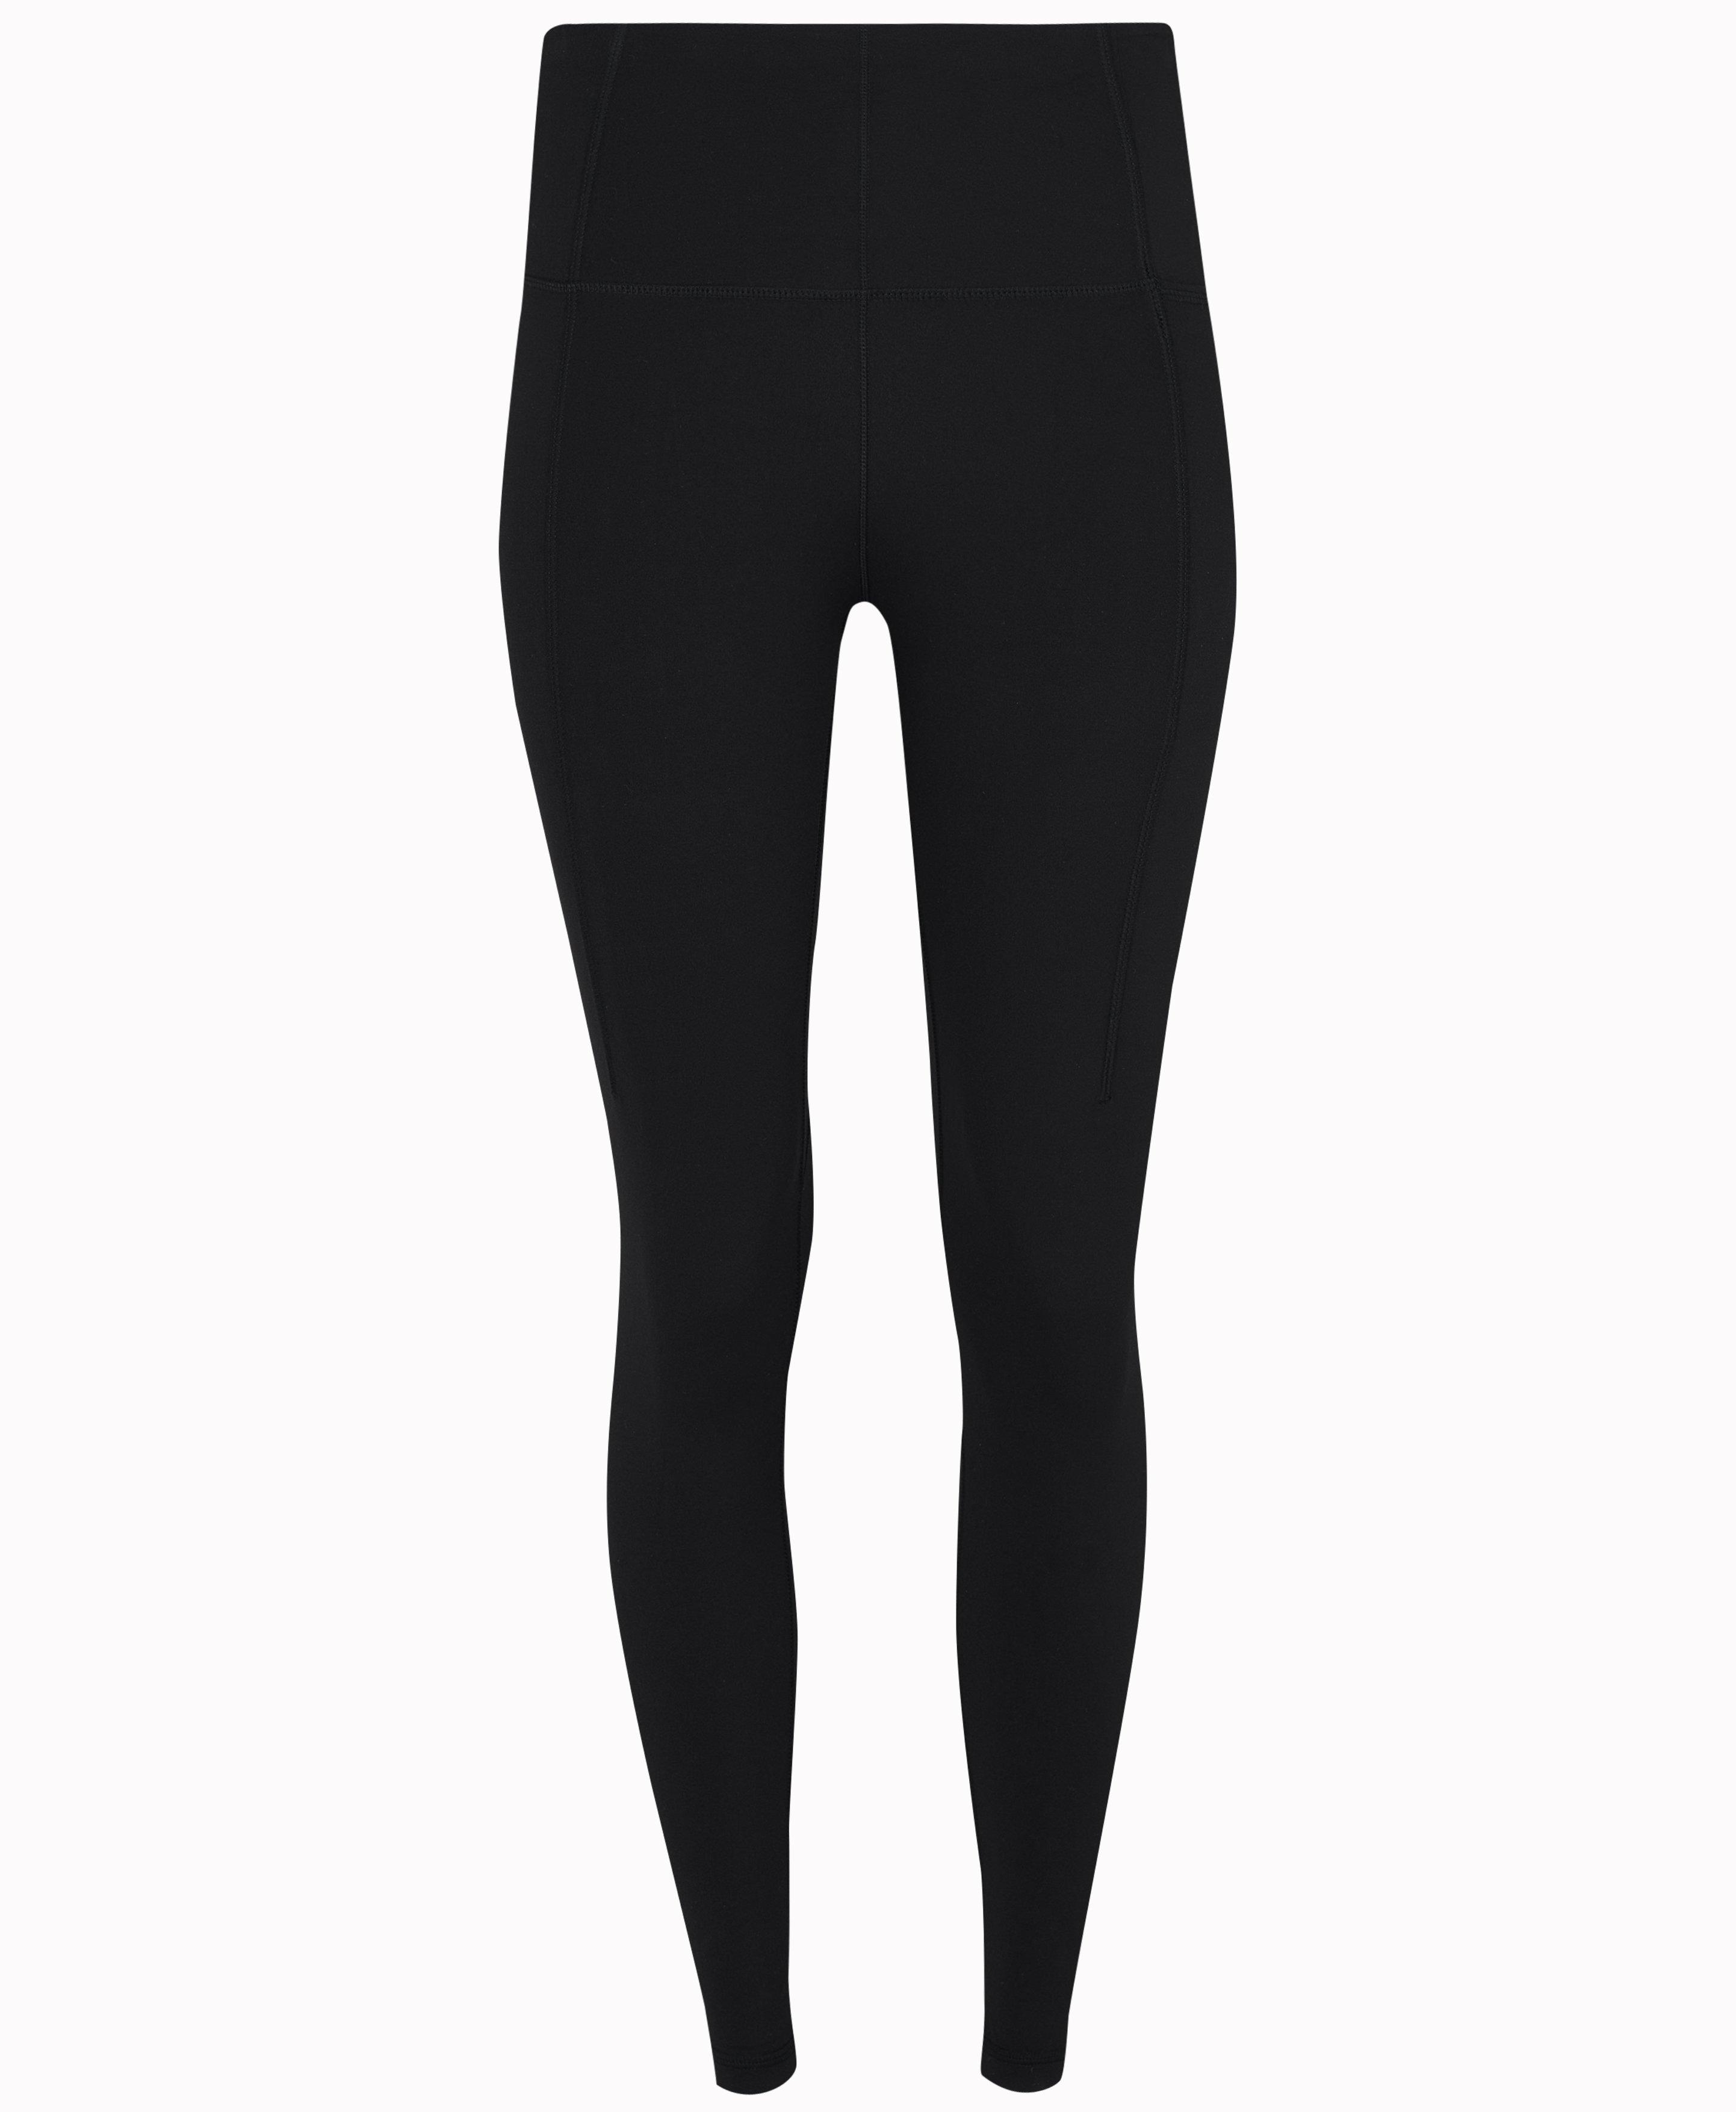 Sweaty Betty Women's Super Soft Yoga Legging in Black Leaf Print Size SMALL